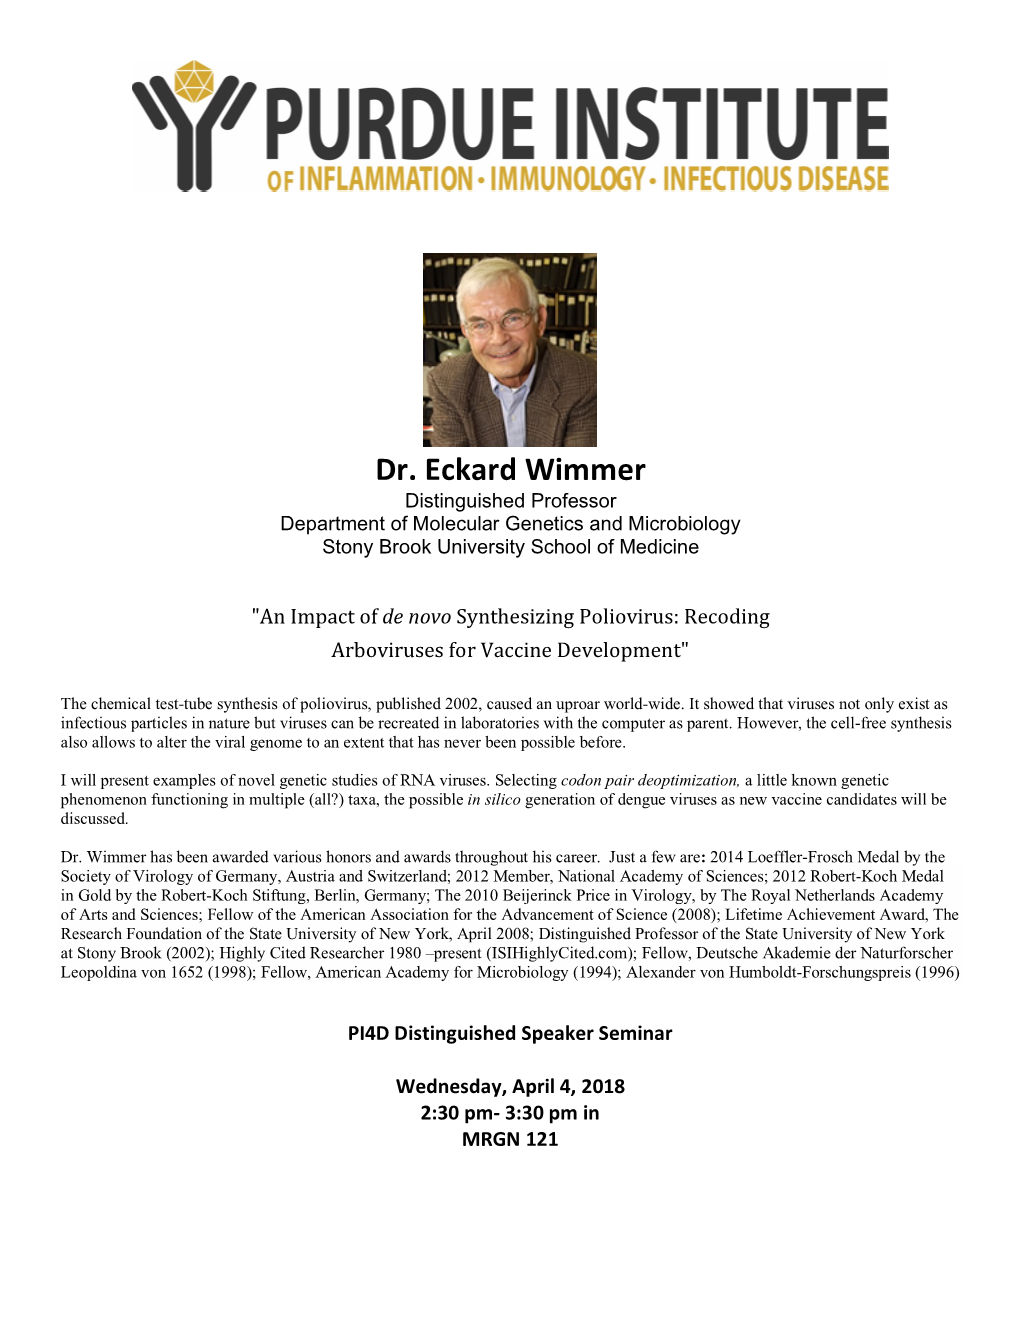 Dr. Eckard Wimmer Distinguished Professor Department of Molecular Genetics and Microbiology Stony Brook University School of Medicine